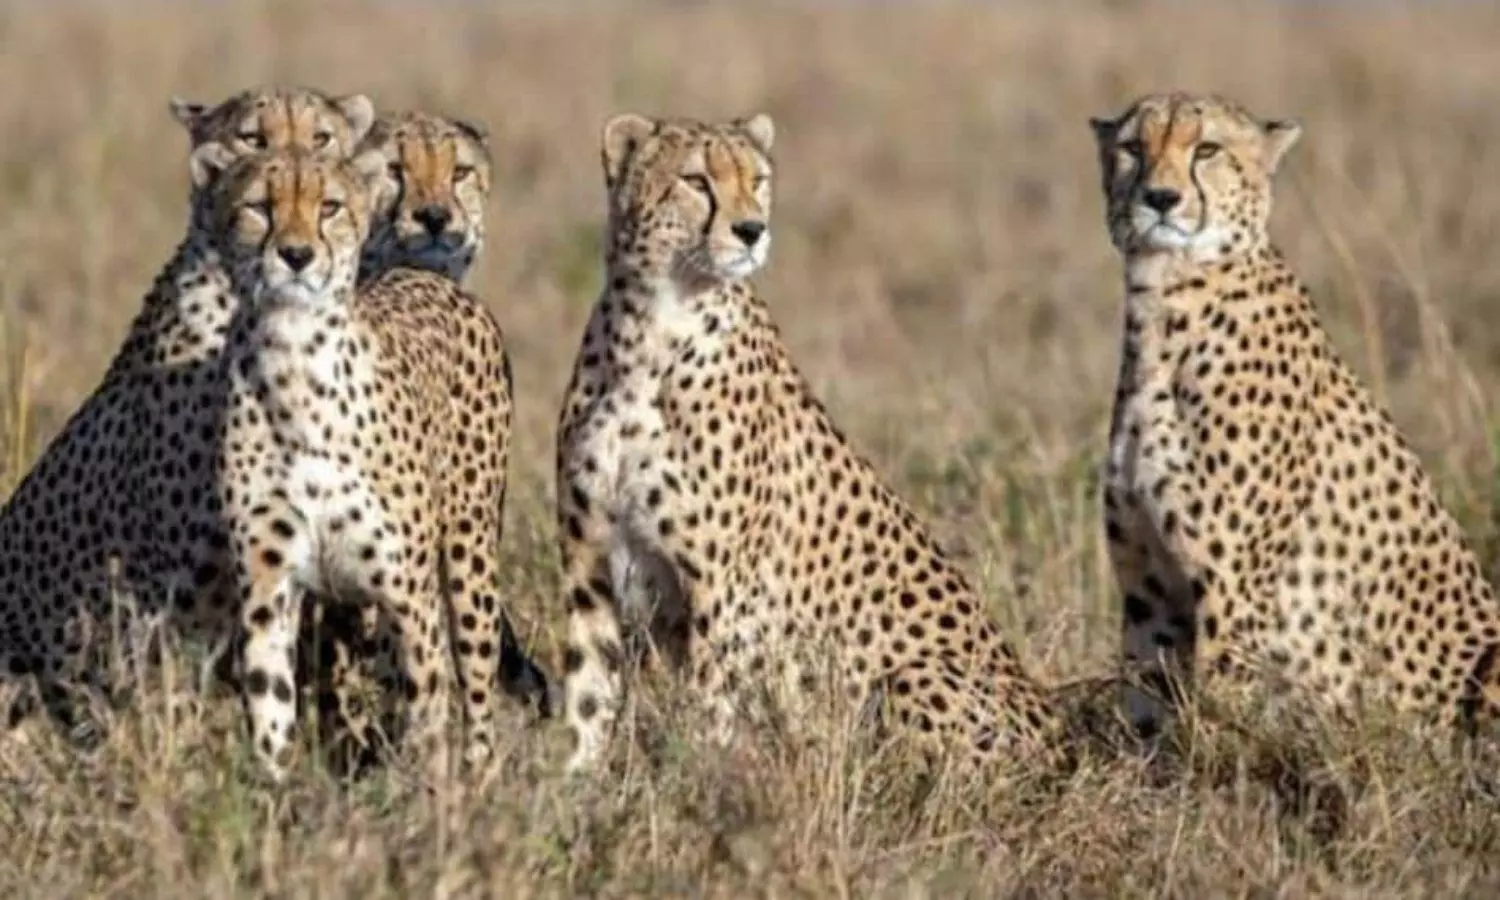 Cheetah in India